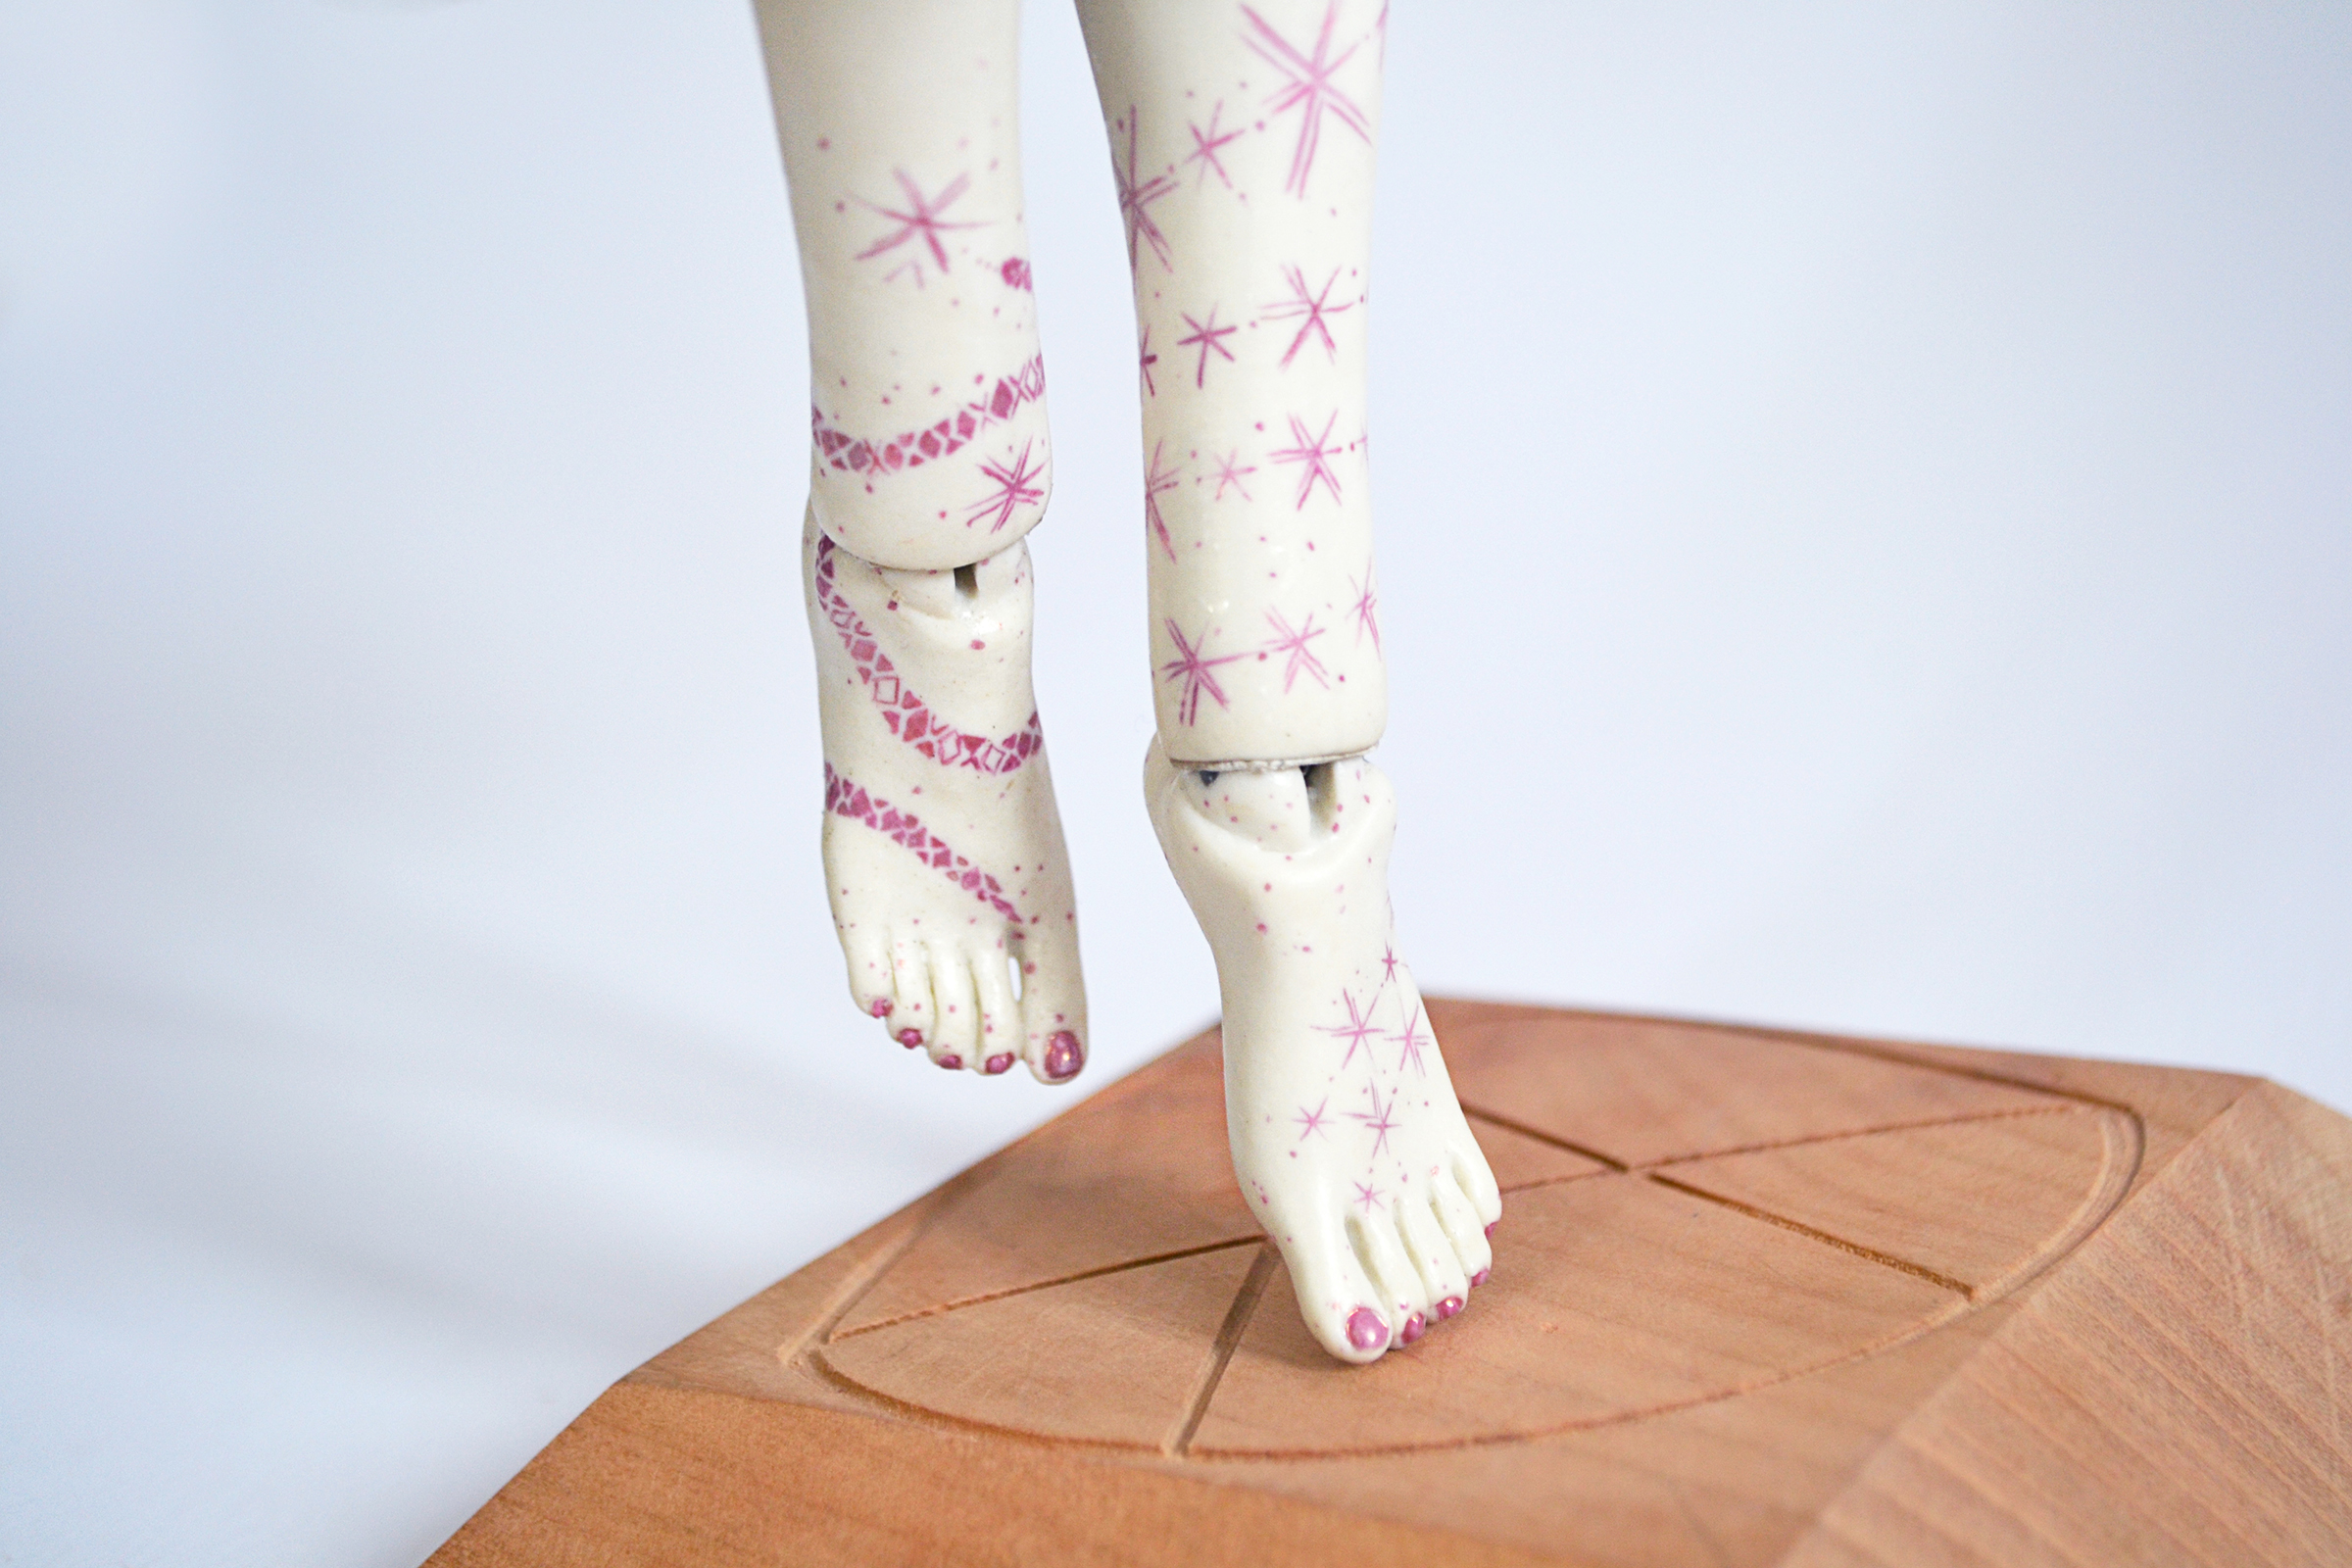 dragostea-art-bjd-alice-doll-feet-closeup-foot-porcelain